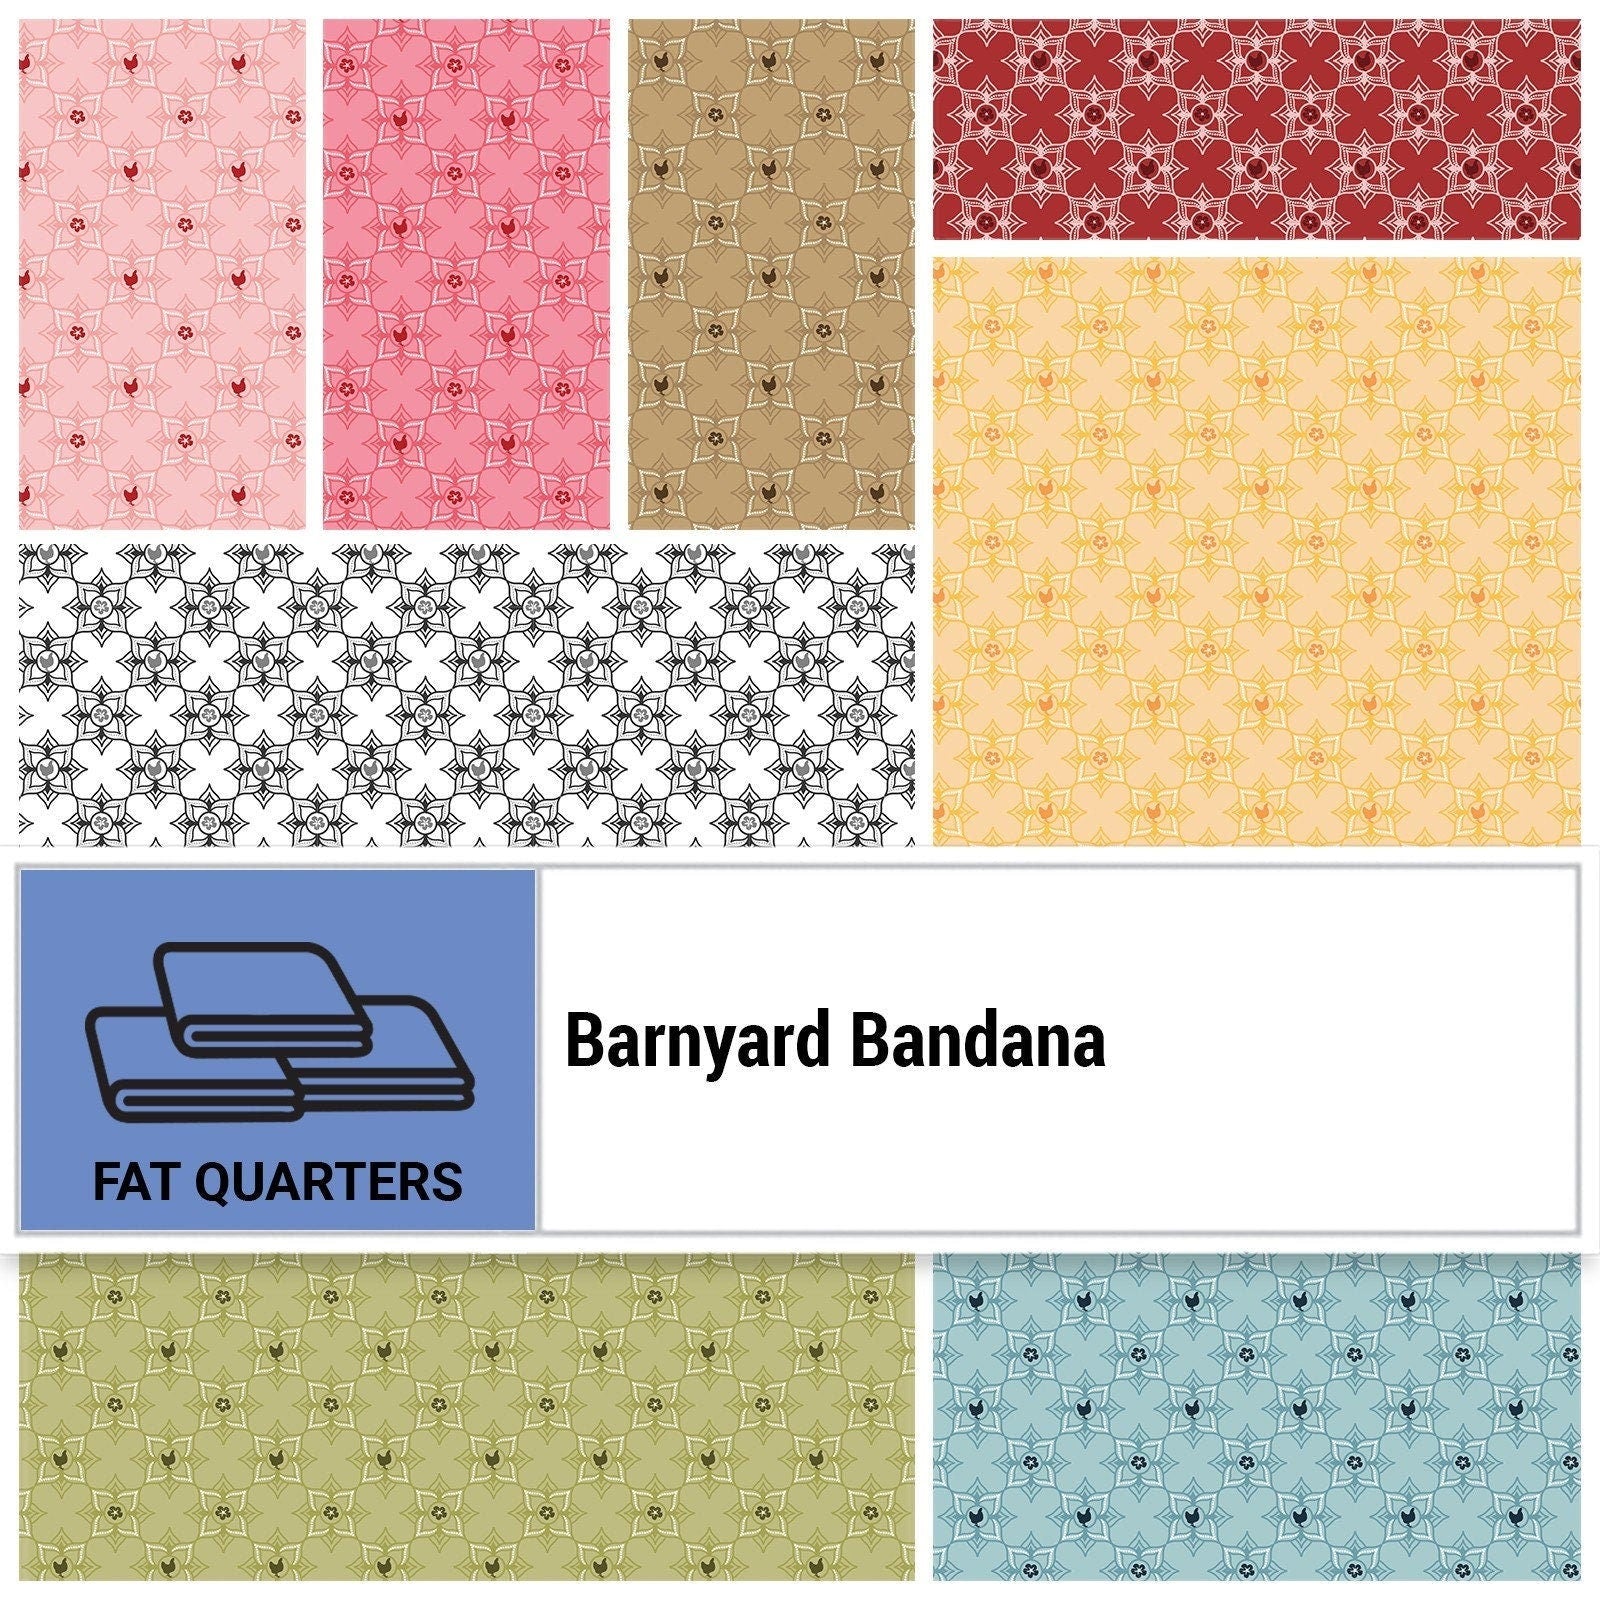 Barnyard Bandana set from Farmhouse Favorites by Poppie Cotton Quilter&#39;s Cotton Fat Quarter Bundle. 8 piece set 18 inch x 22 inch squares.